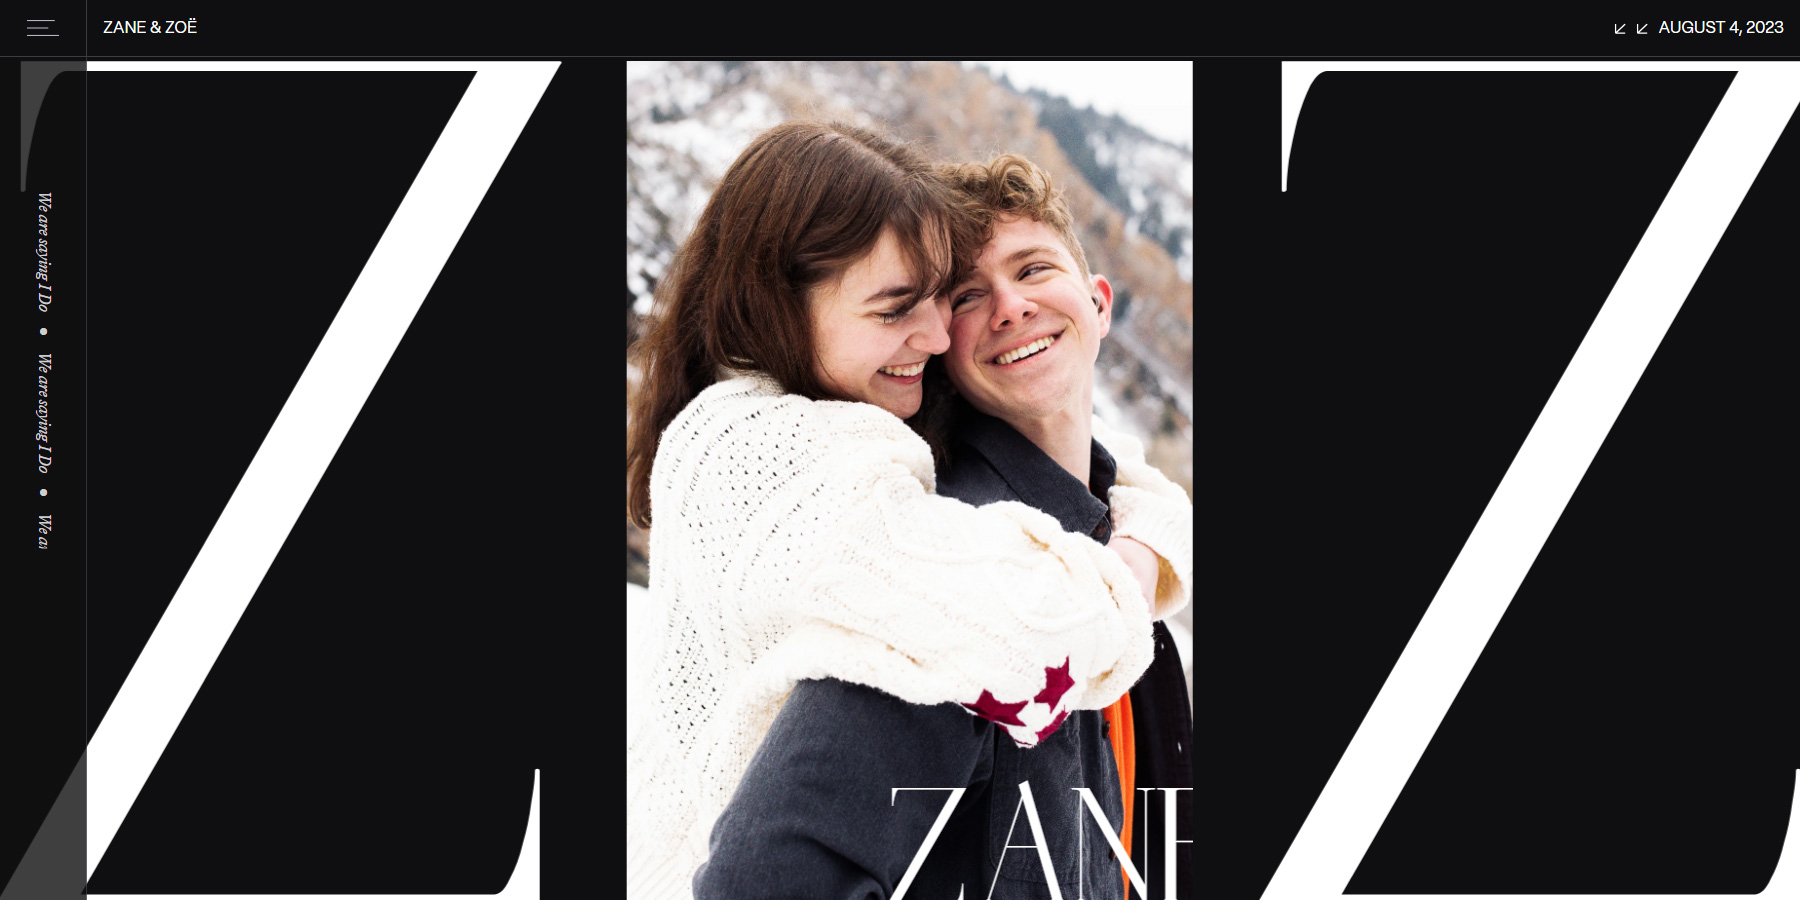 Zane & Zoe - Website of the Day